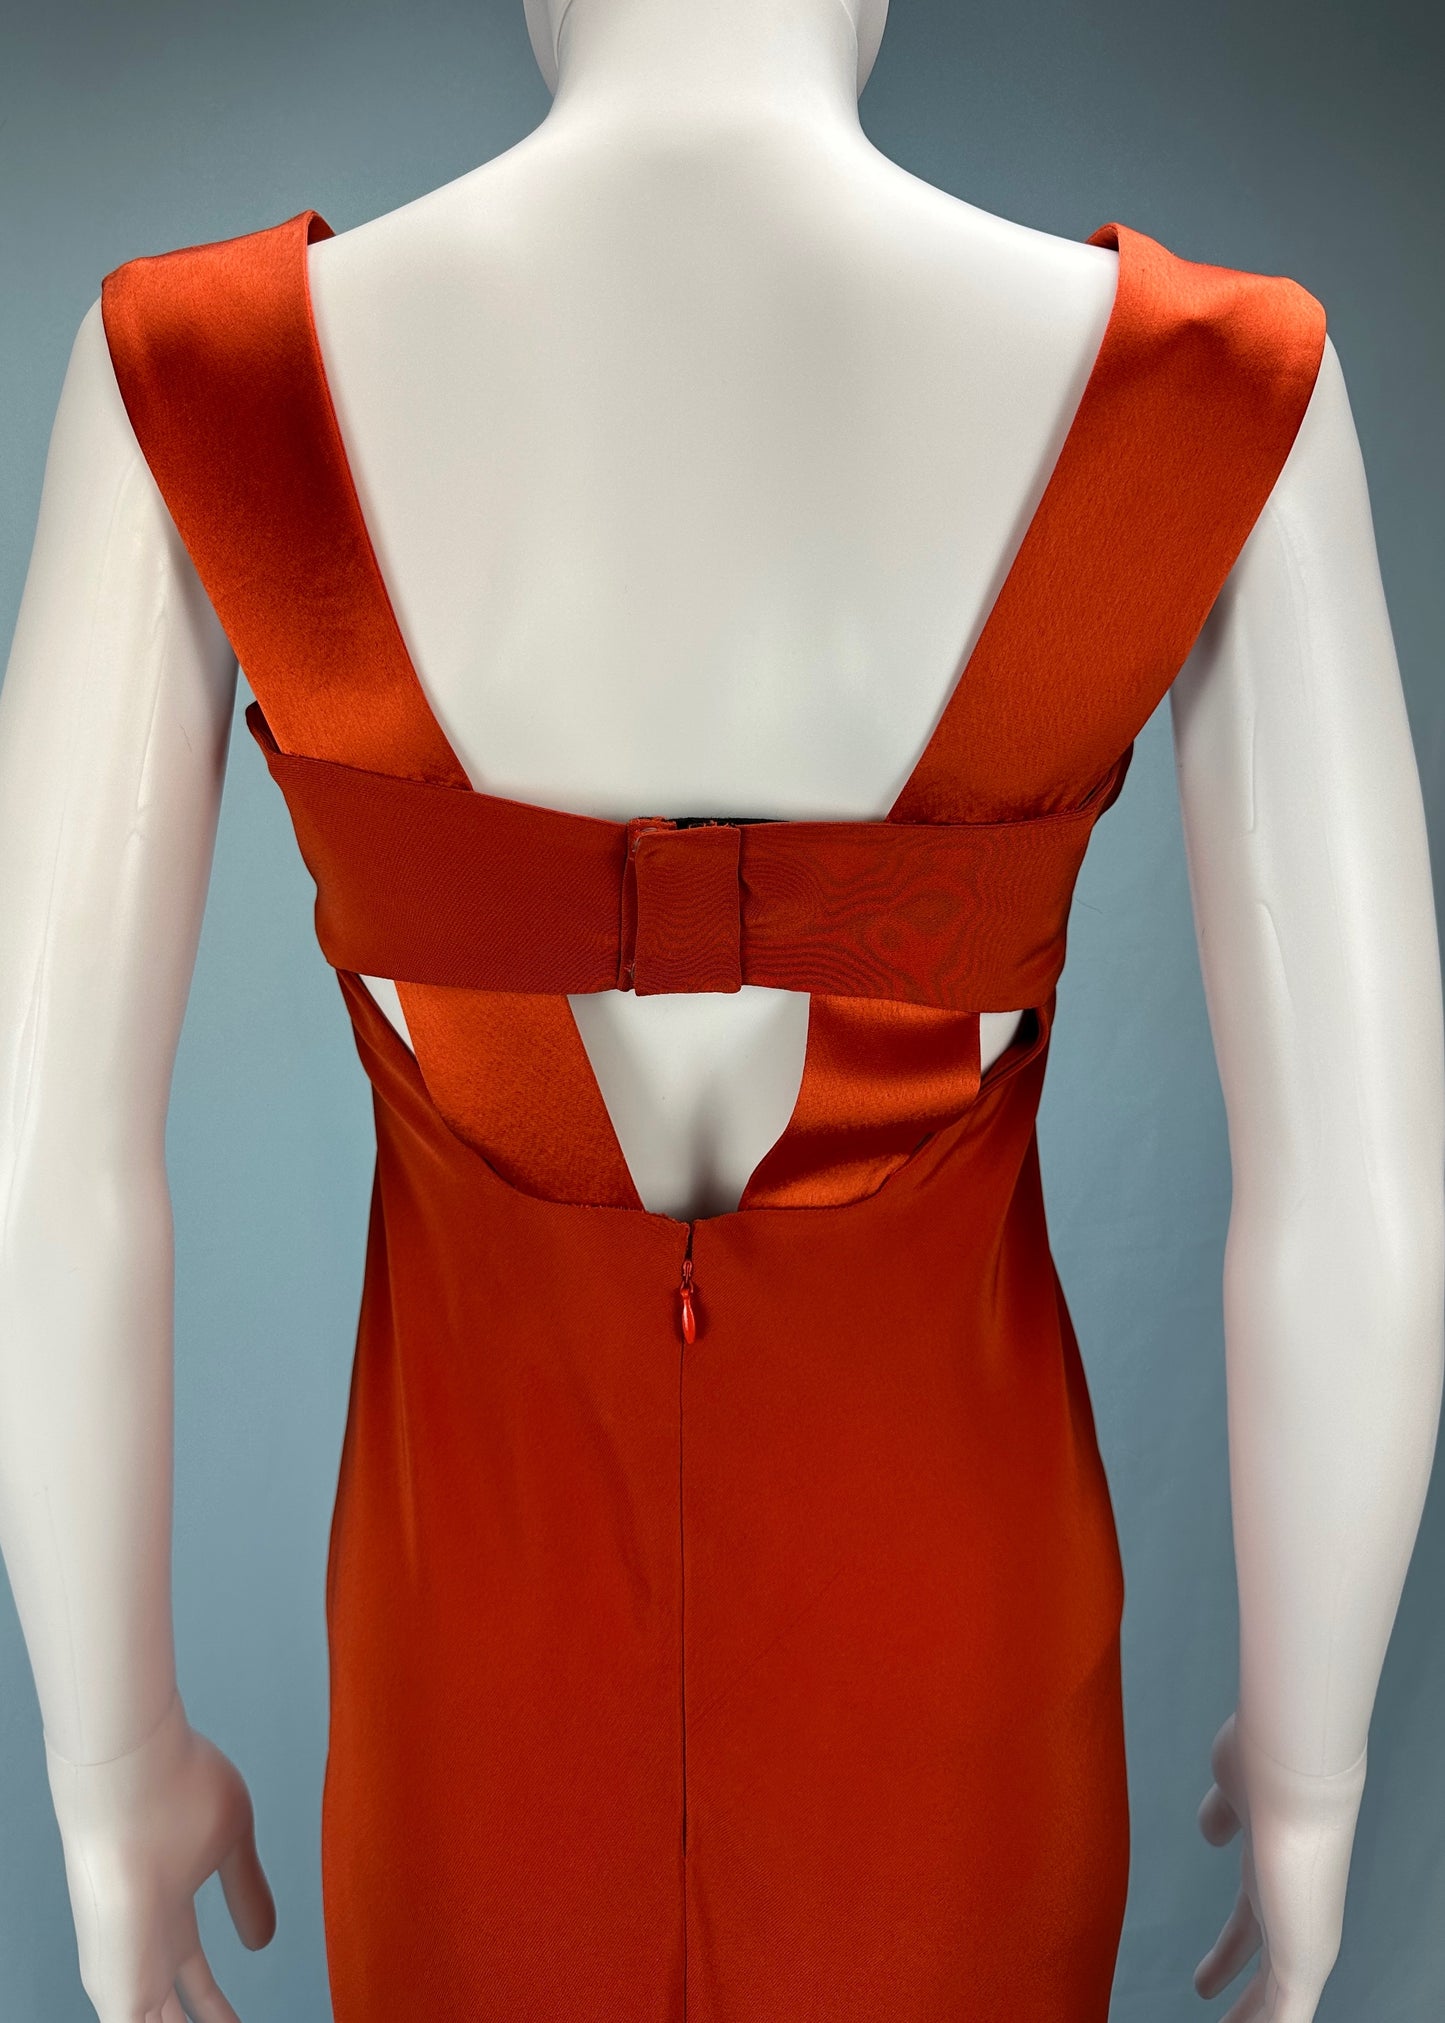 Jean Paul Gaultier Red Satin Dress